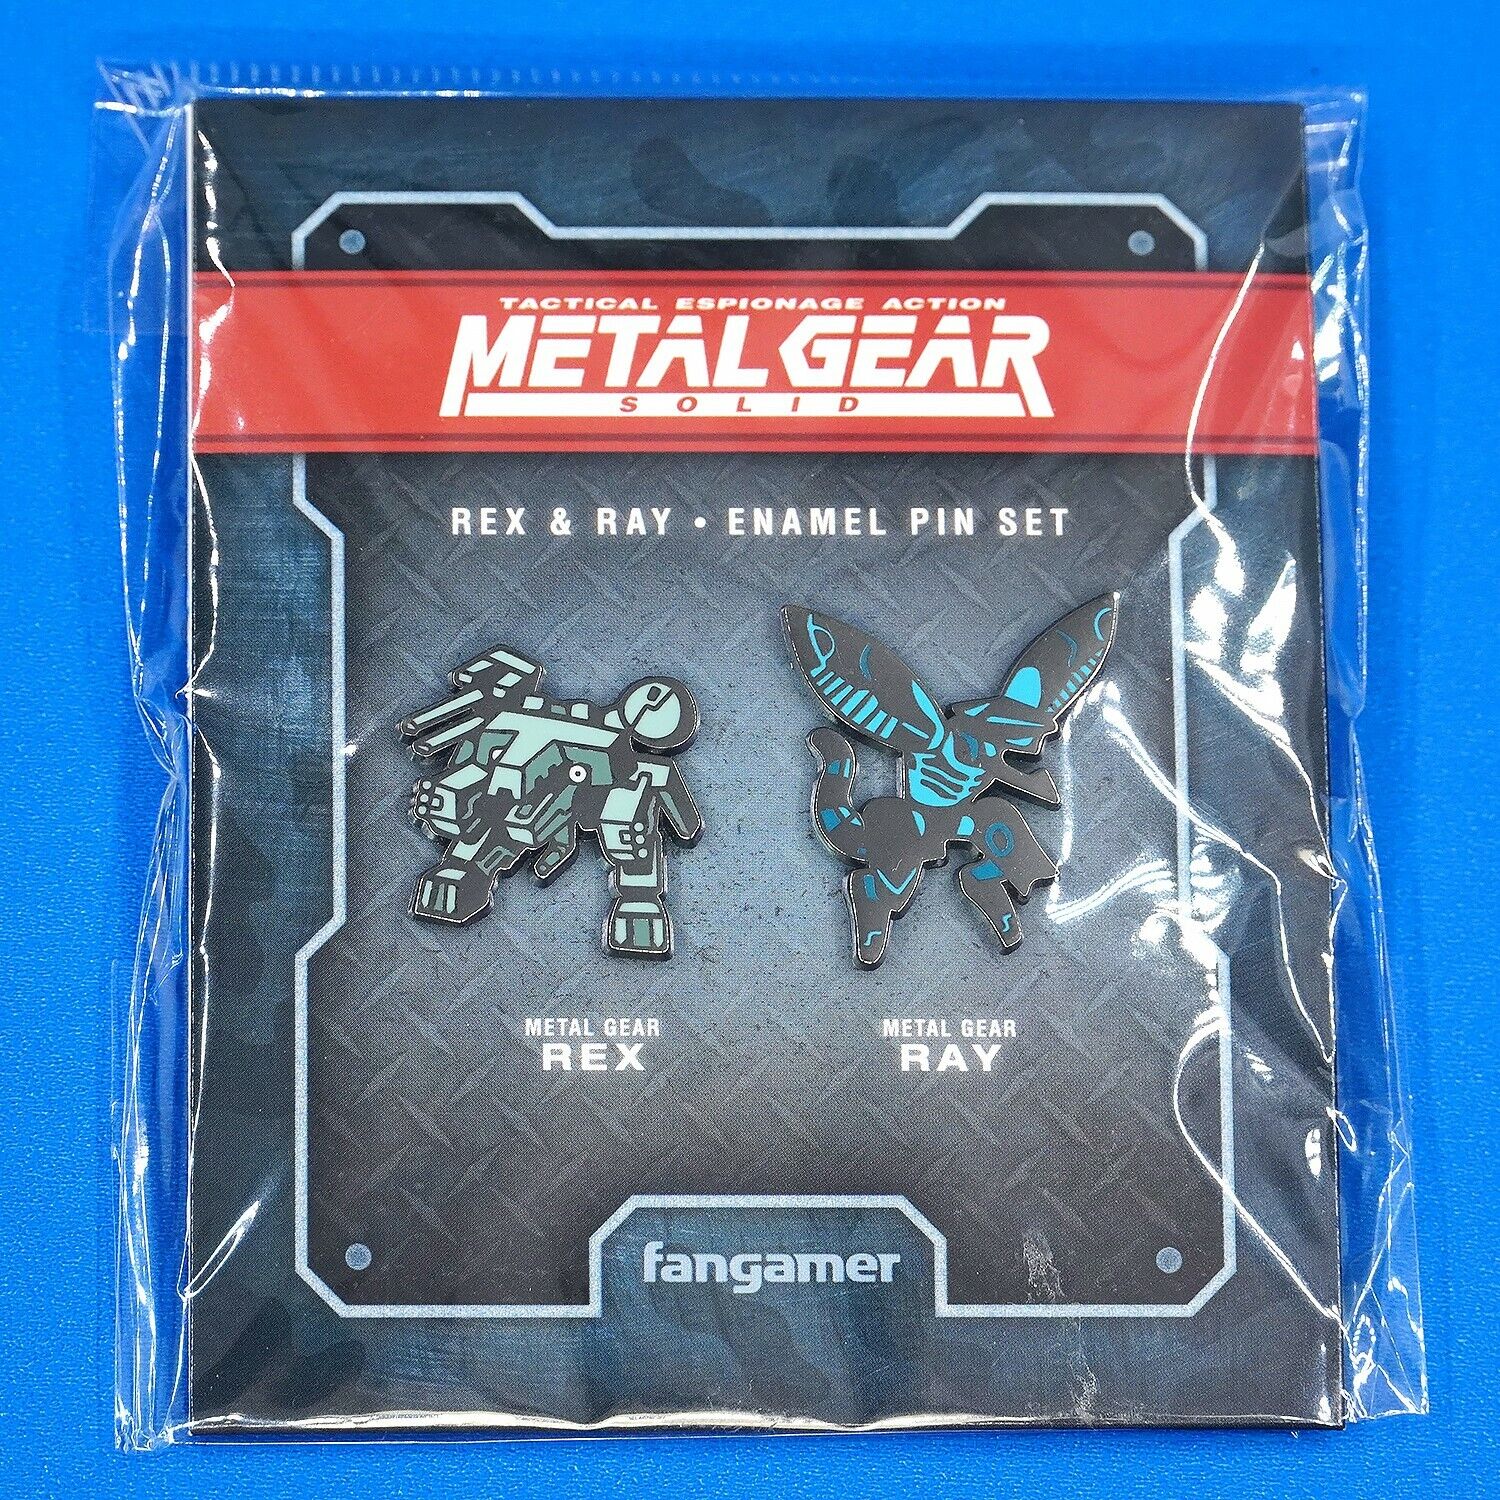 Metal Gear Solid MGS Metal Gear REX & Metal Gear RAY Enamel Pin Set of 2